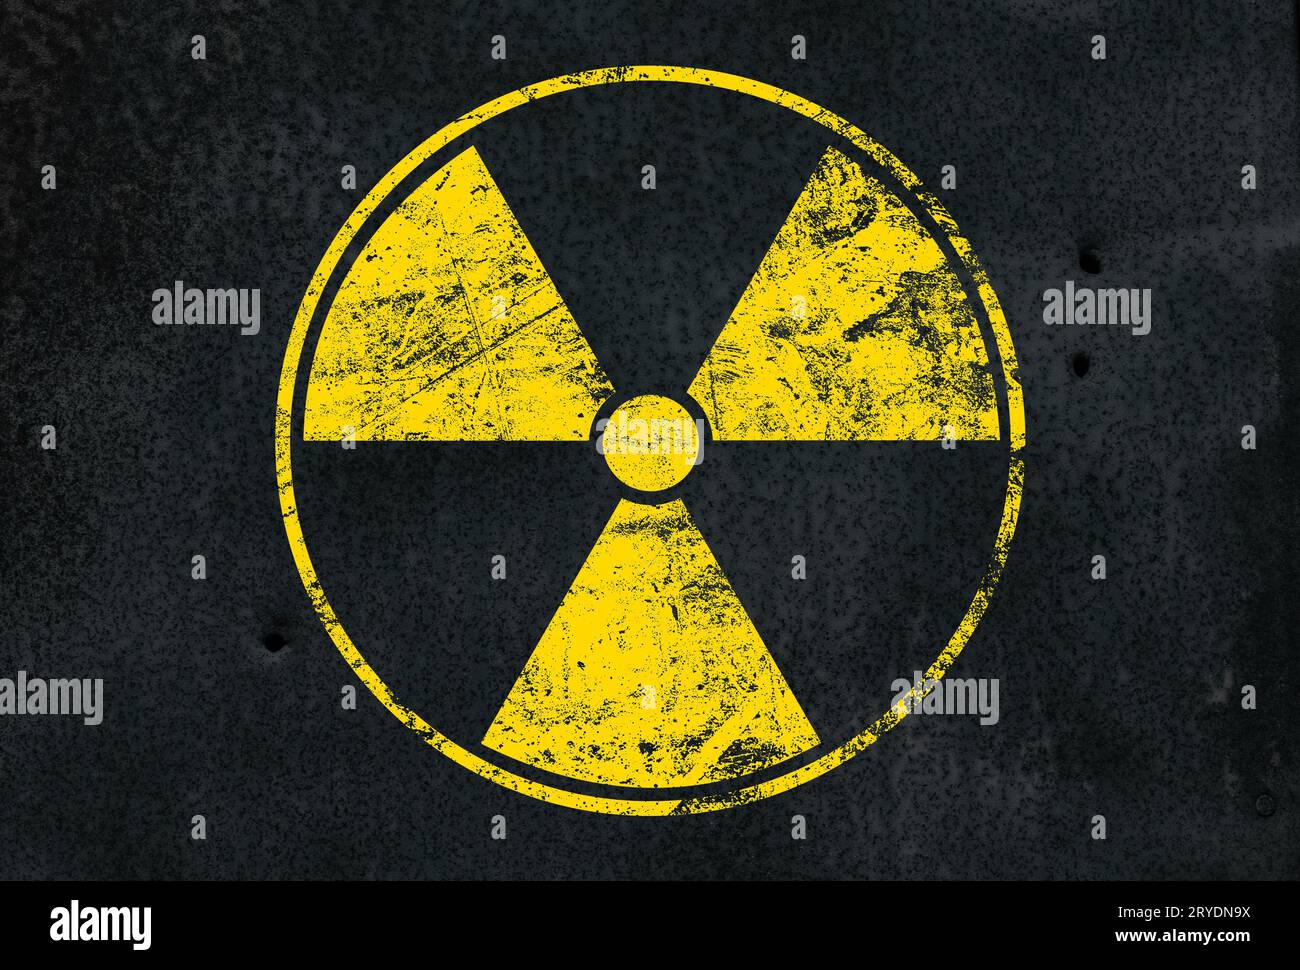 Yellow radioactive sign over black background Stock Photo